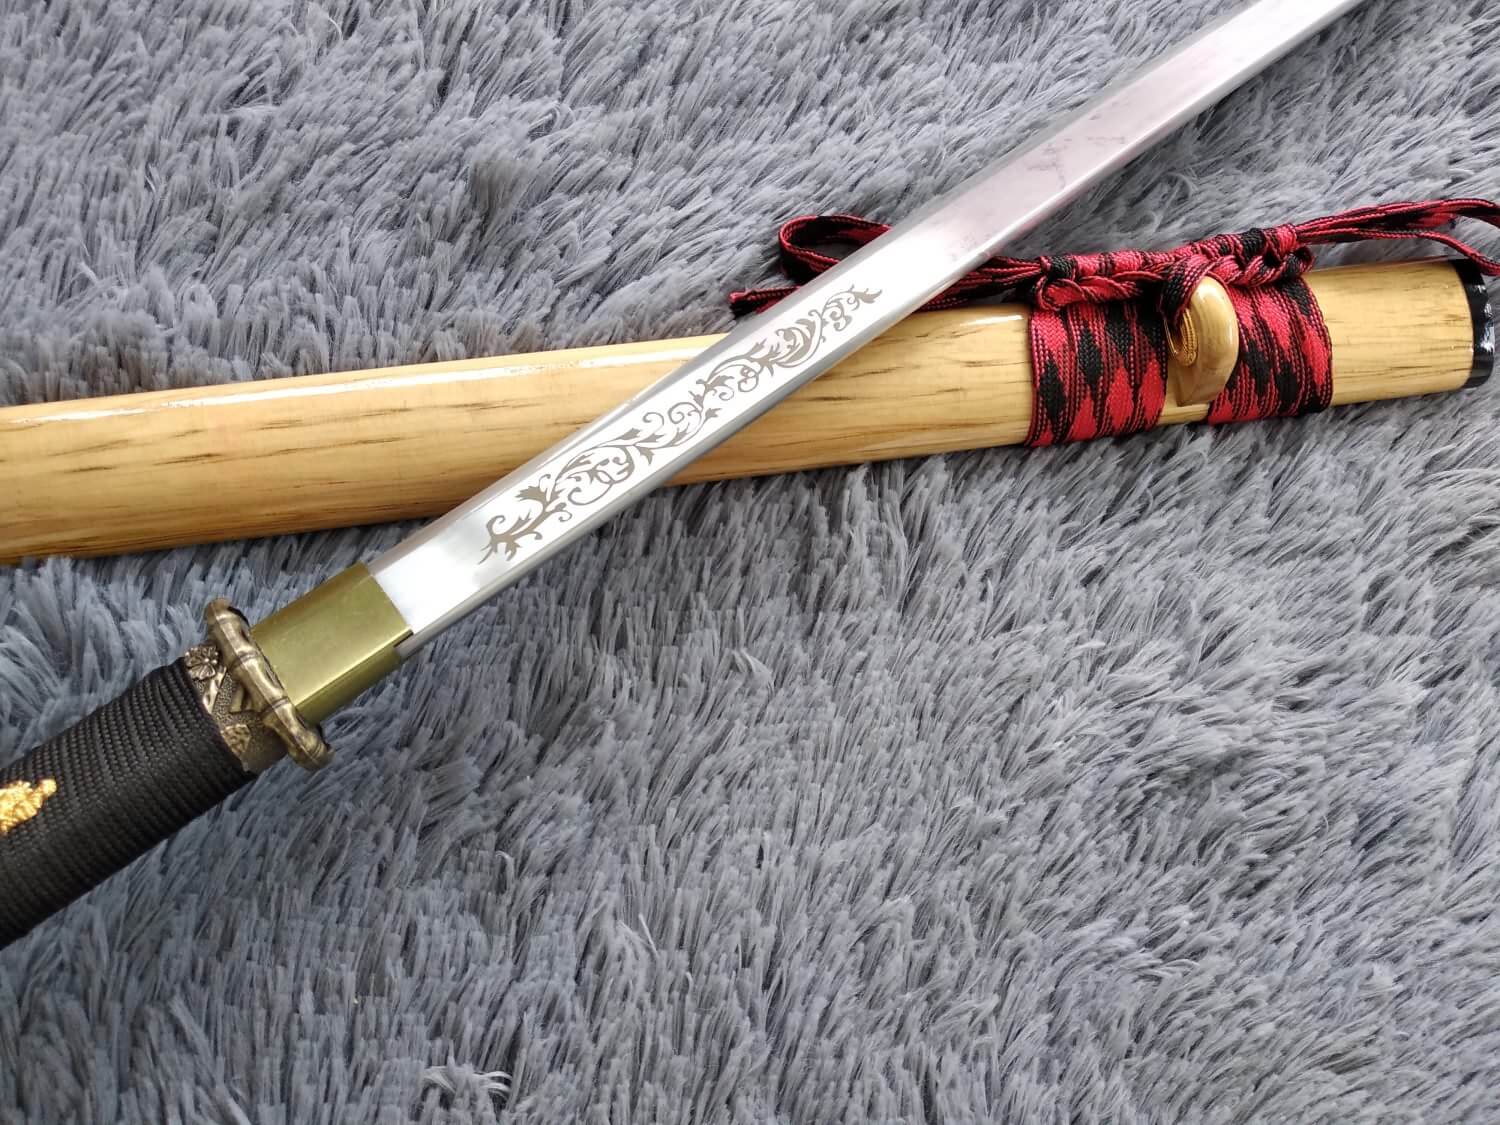 Tang sword,Ninja,High manganese steel,Hardwood,Alloy - Chinese sword shop